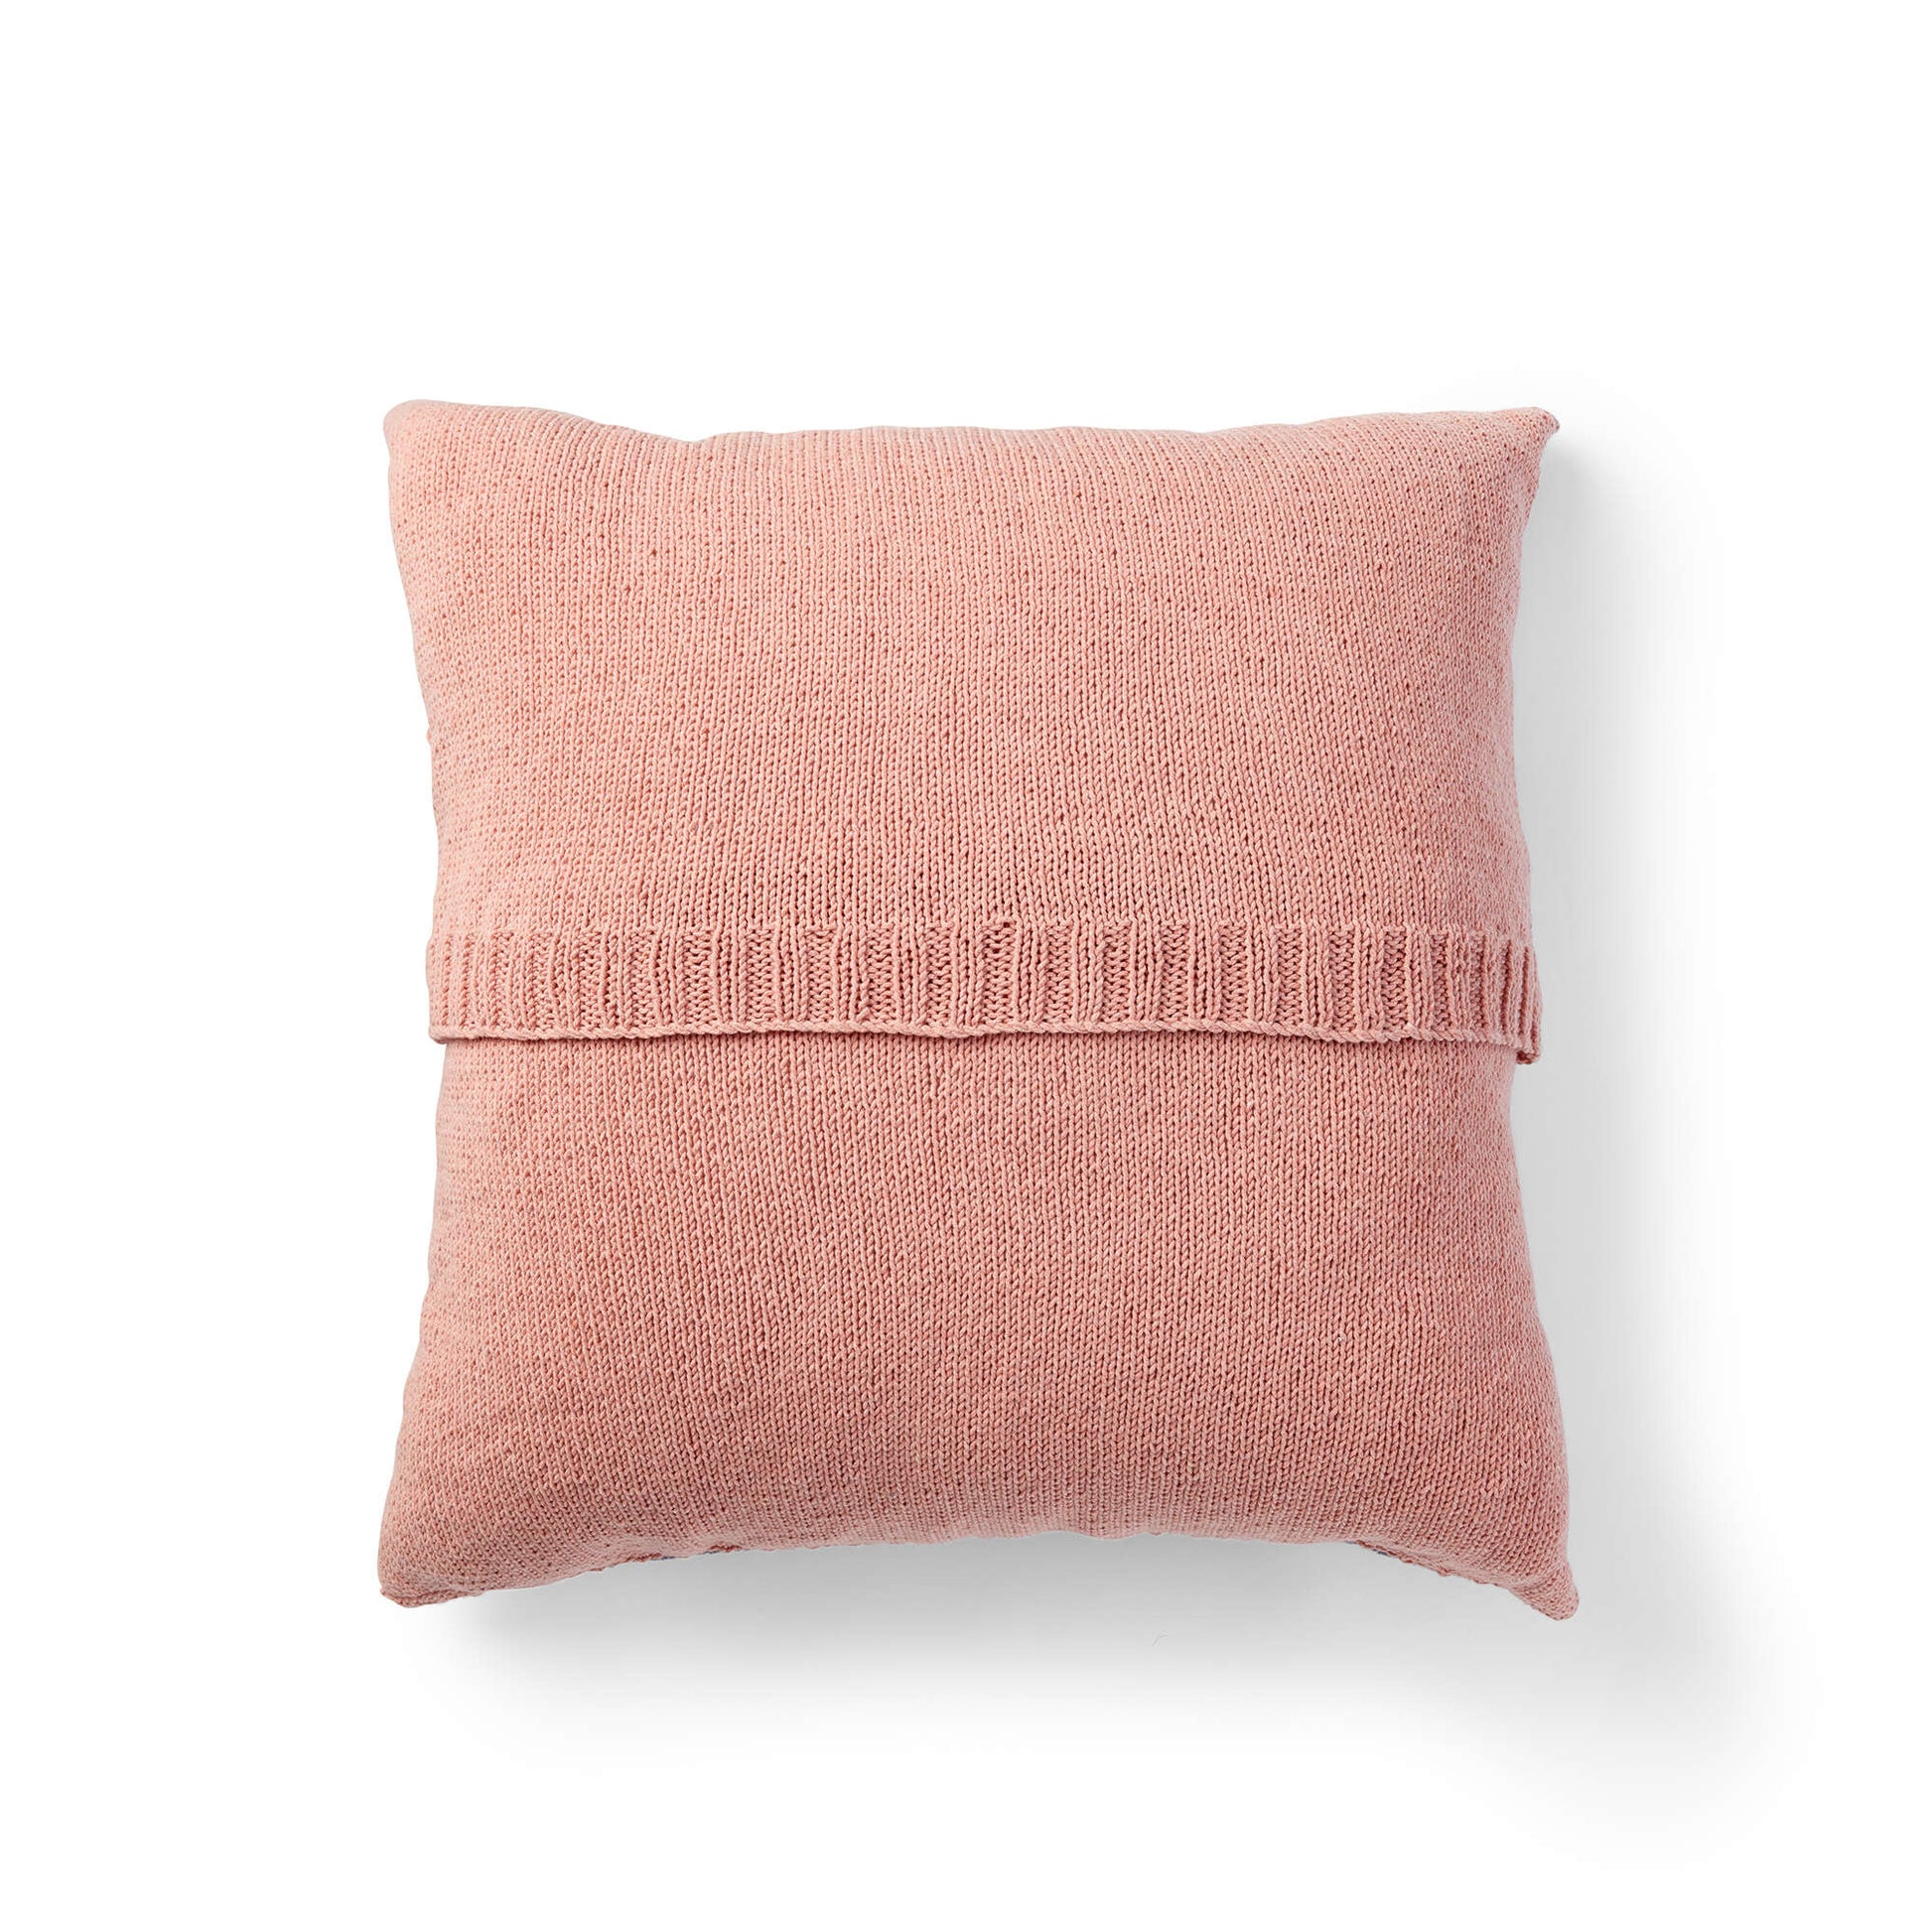 Free Caron Mosaic Knit Grid Pillow Pattern